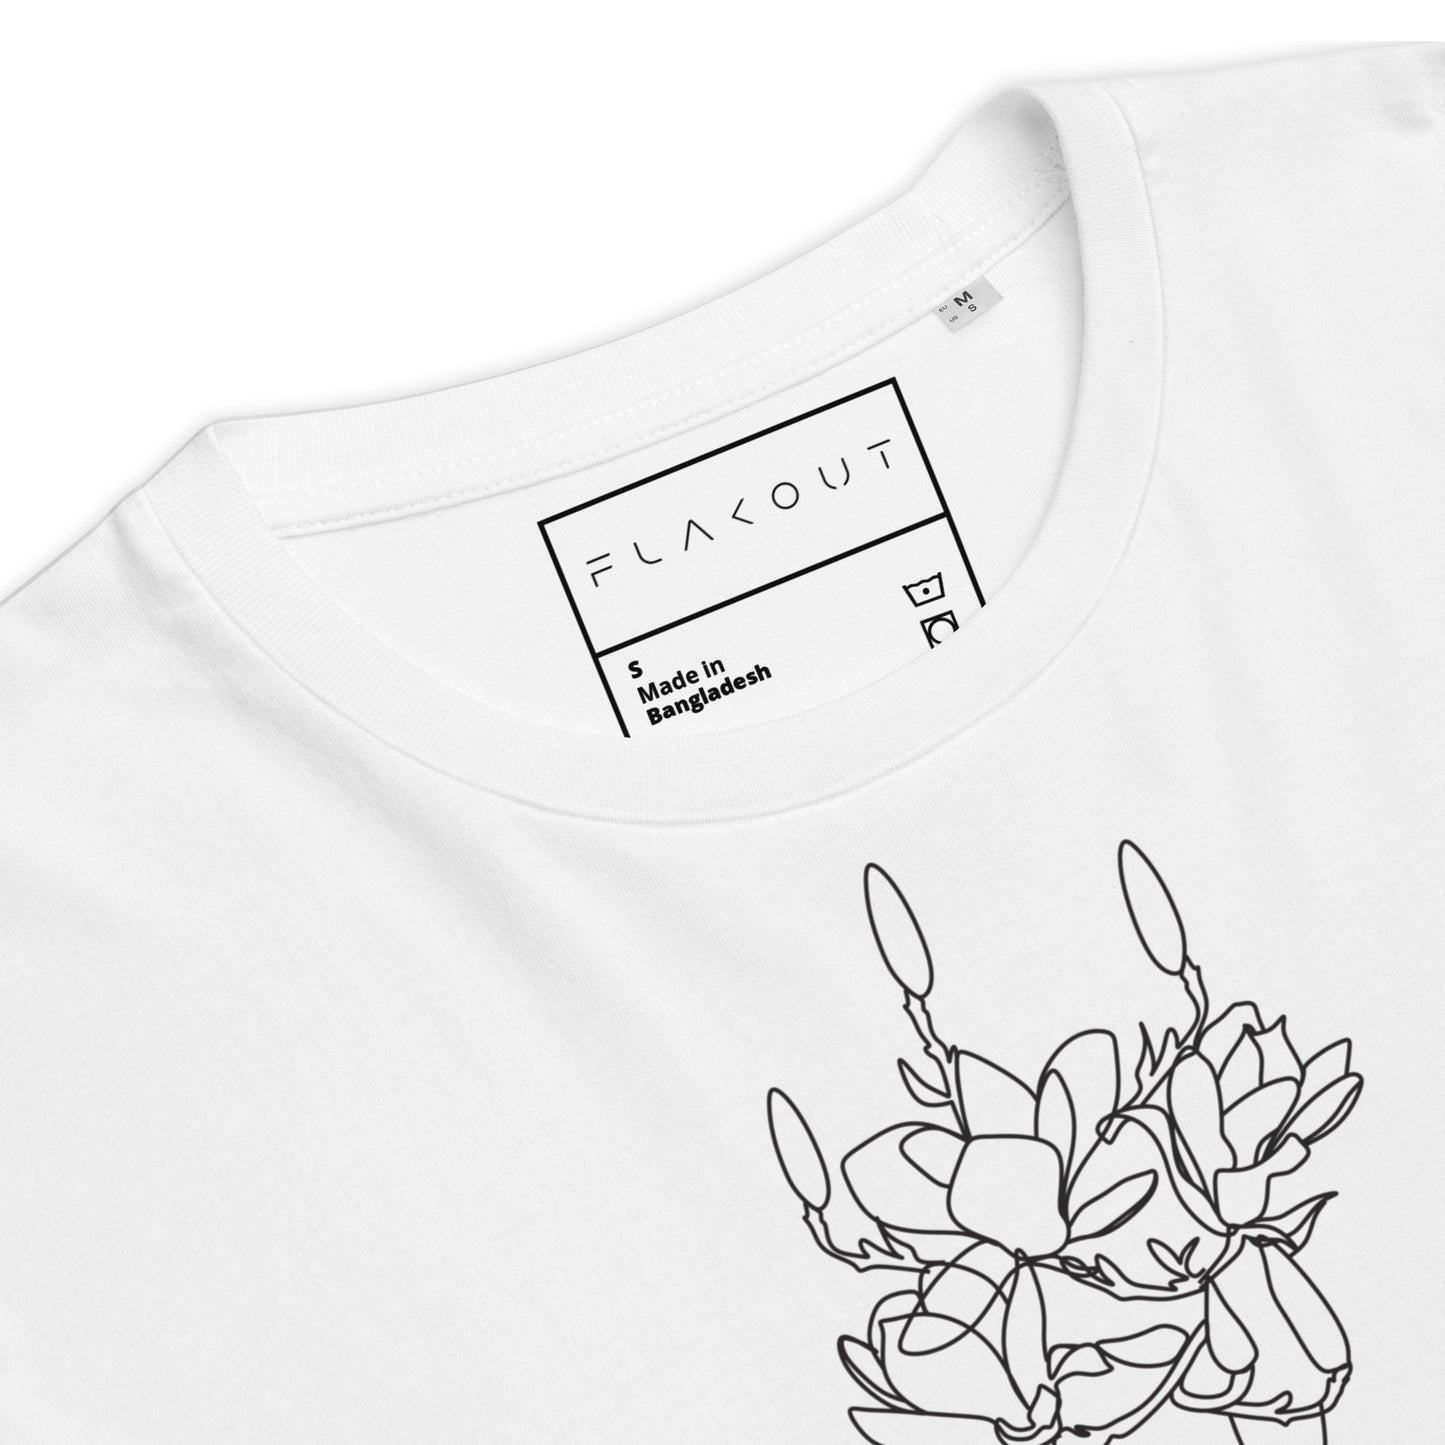 Blossom Anthophilous Affinity T-shirt